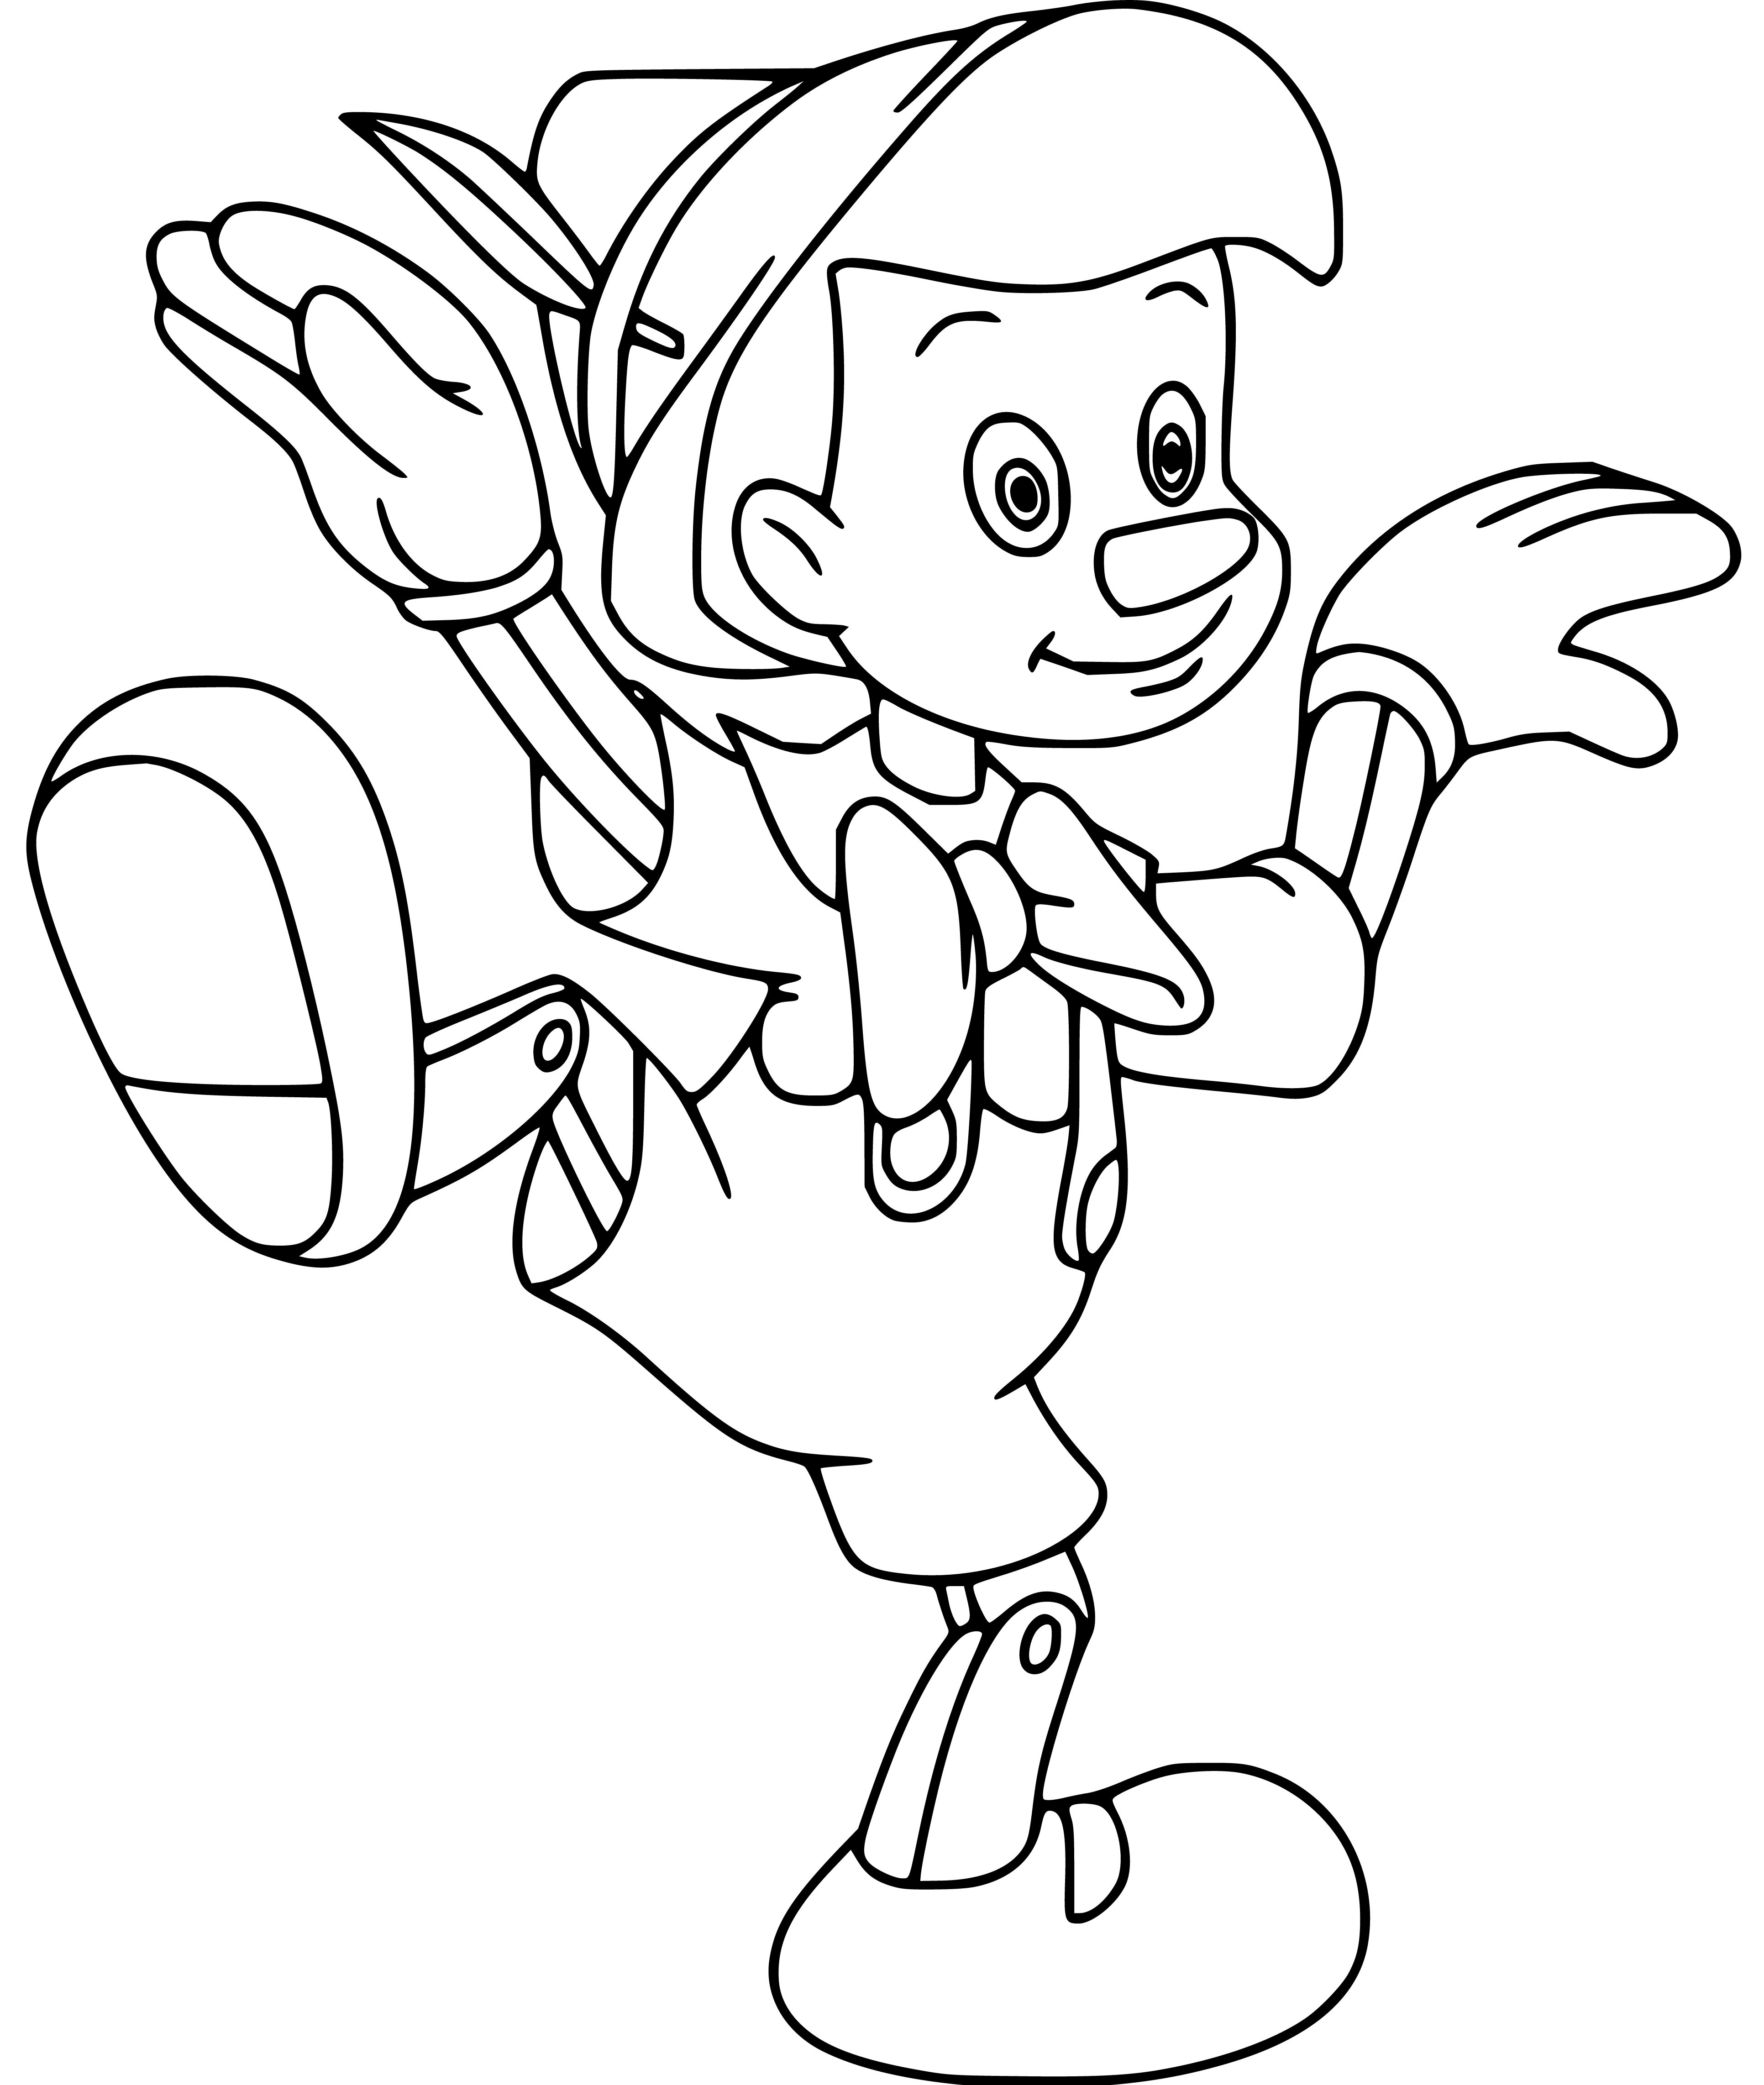 Pinocchio Coloring Page Easy for Kids Disney - SheetalColor.com